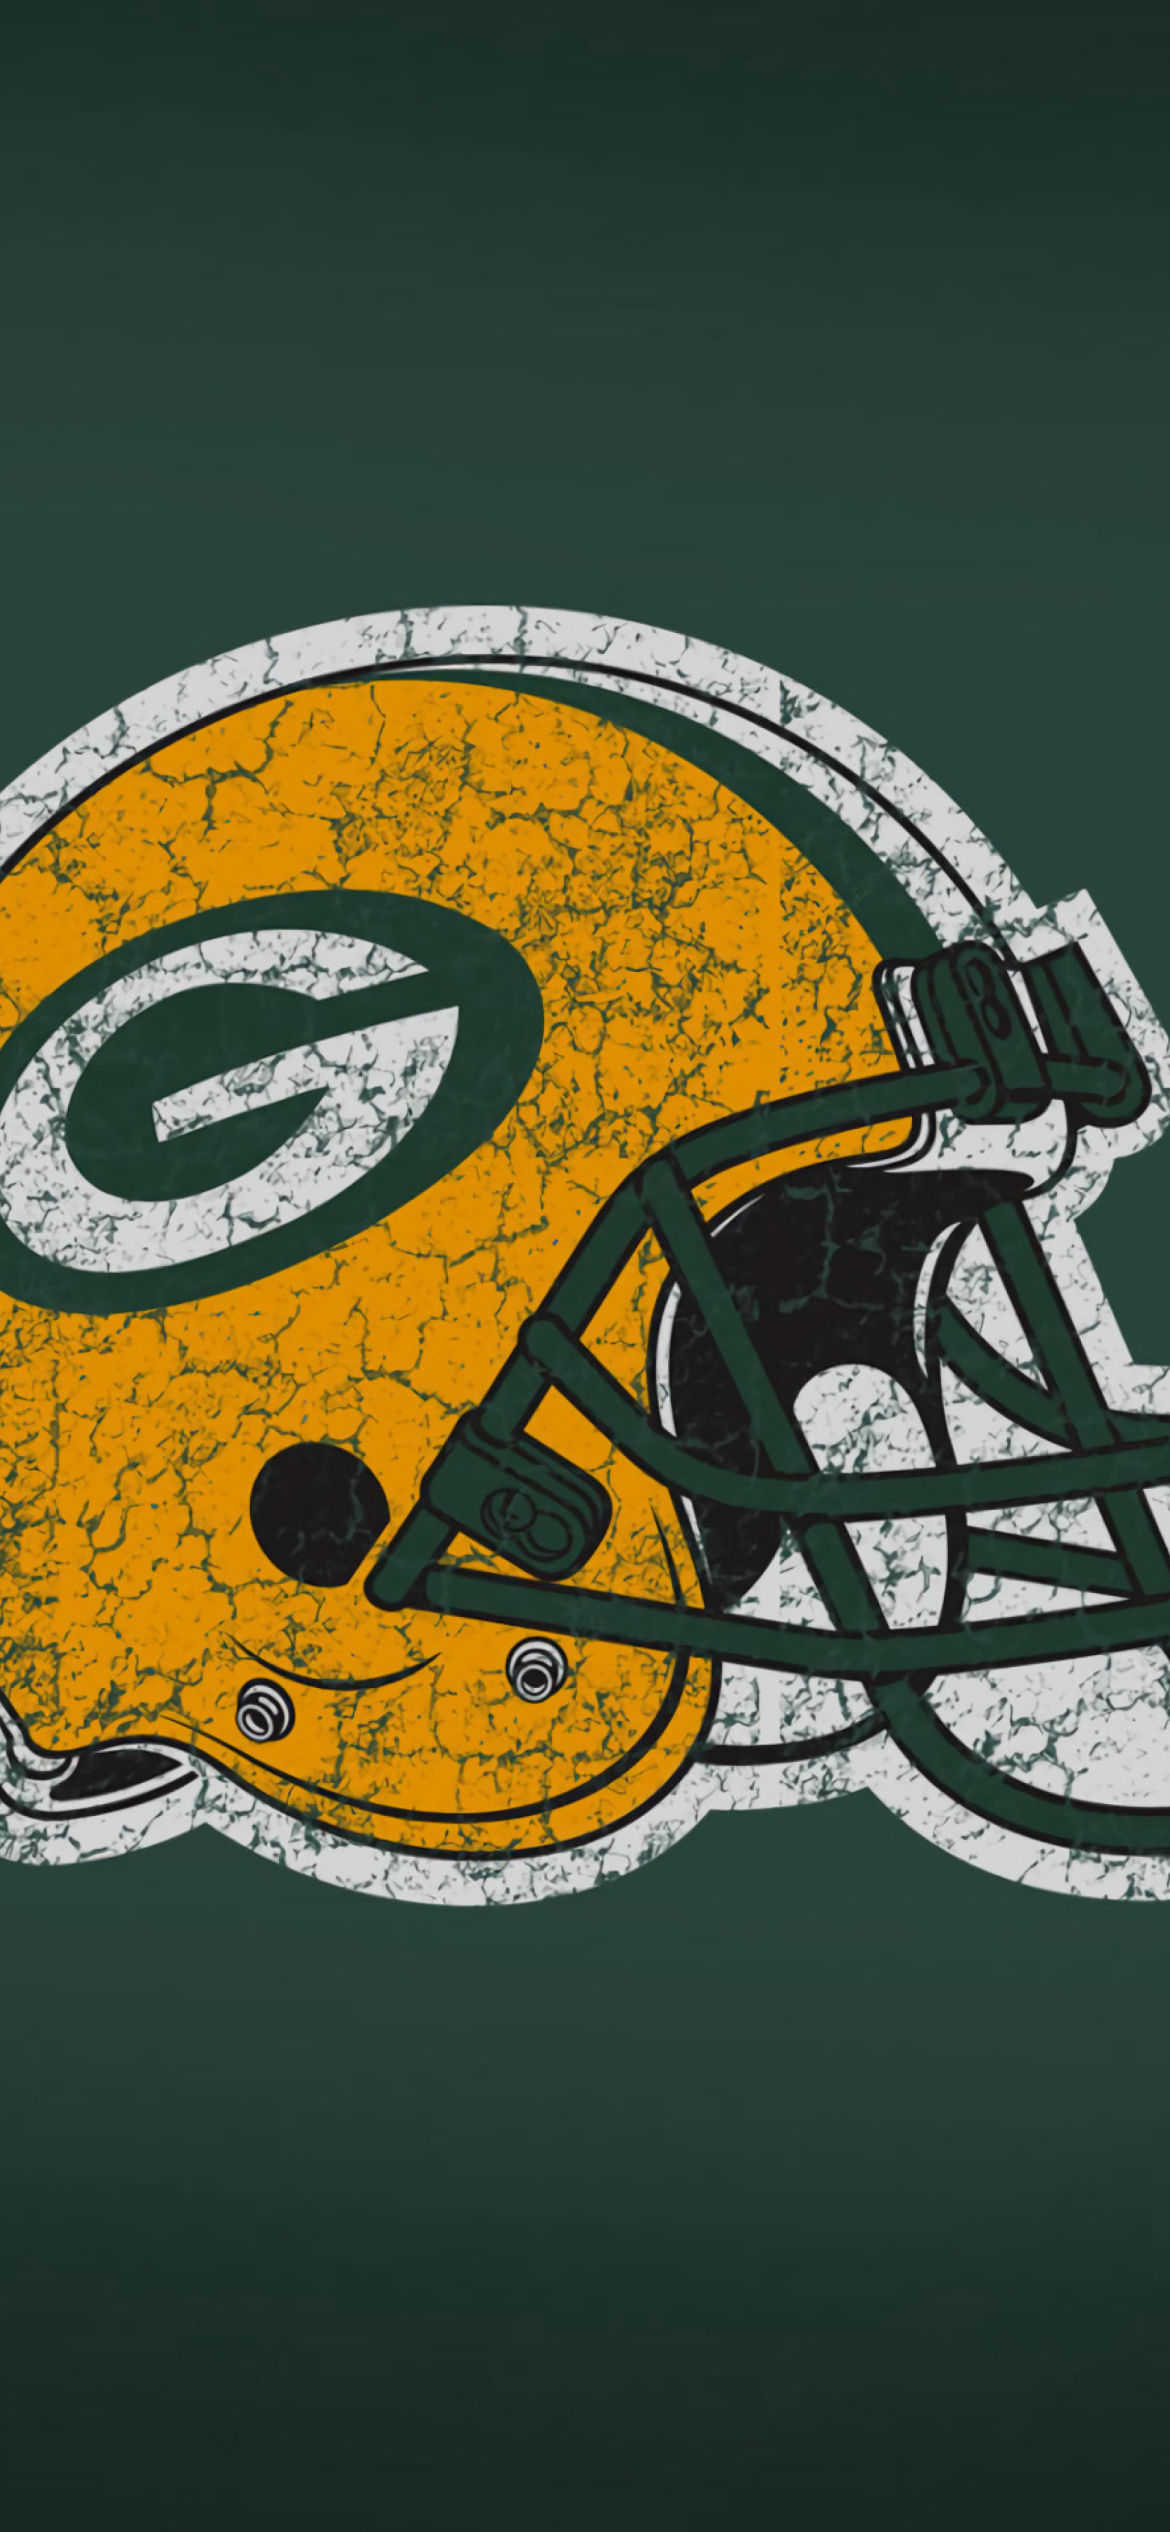 Green Bay Packers NFL Wisconsin Team wallpaper 1170x2532